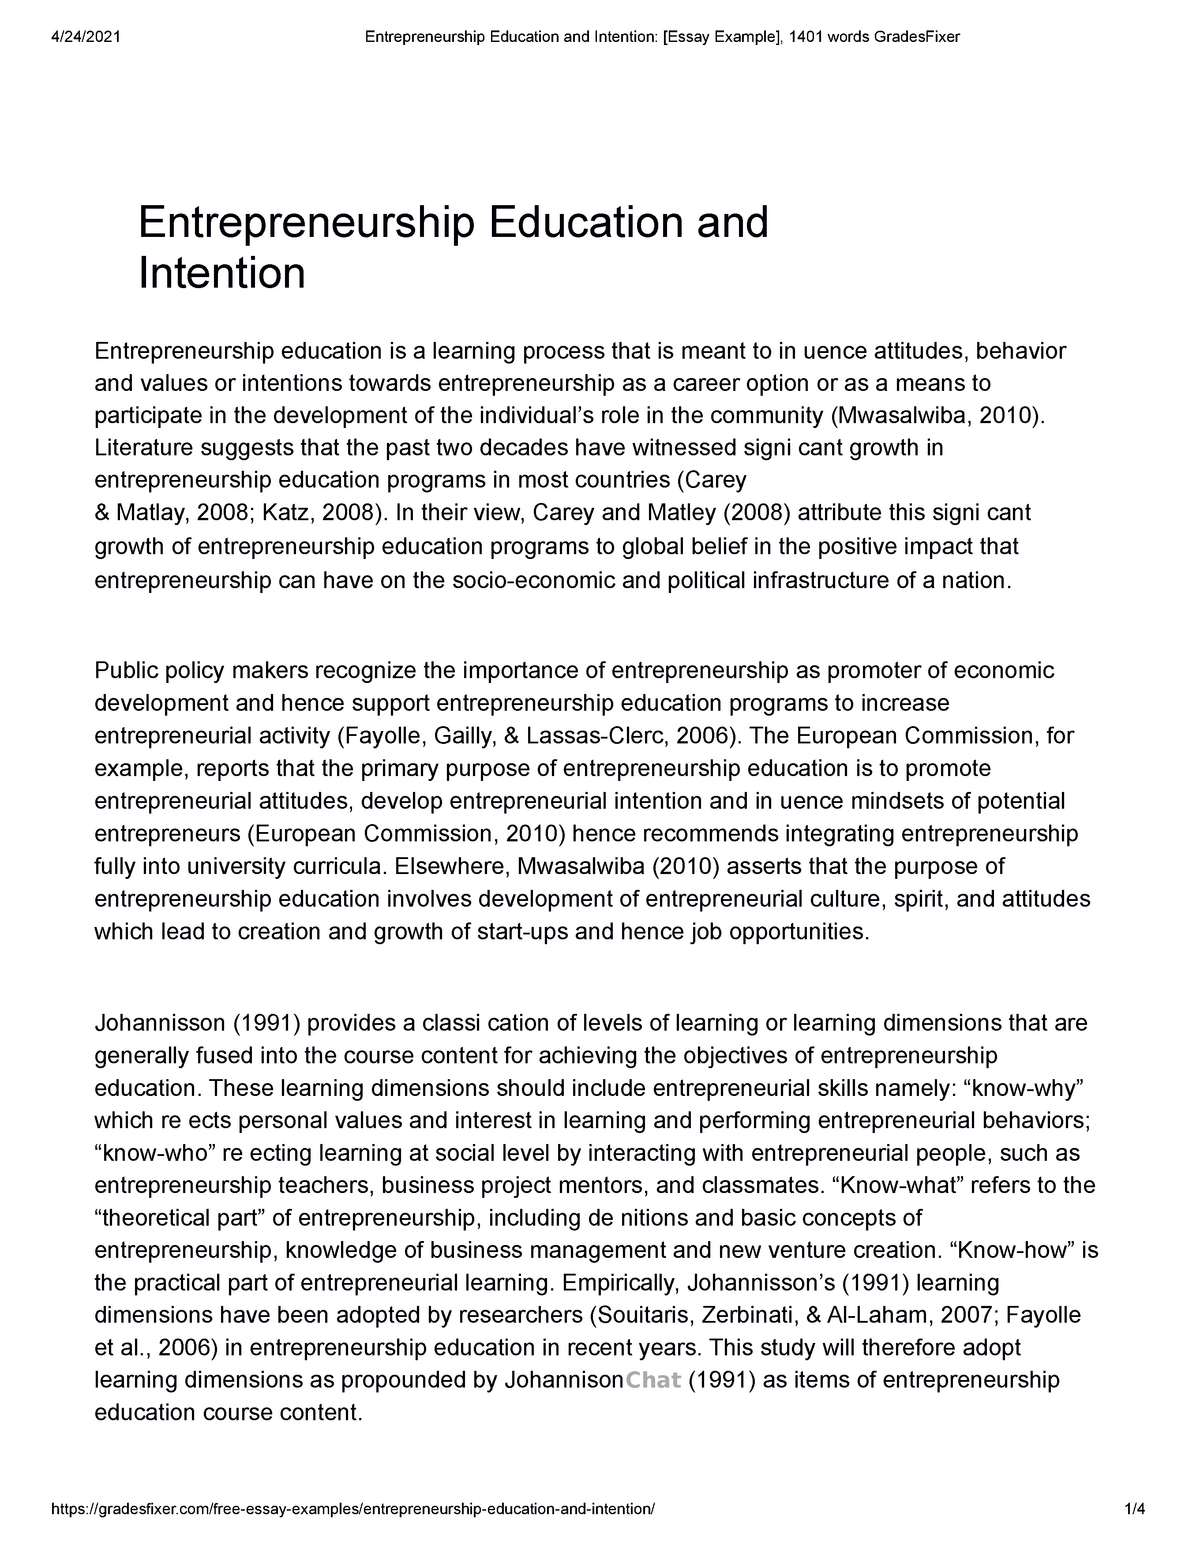 essay on entrepreneurship skills